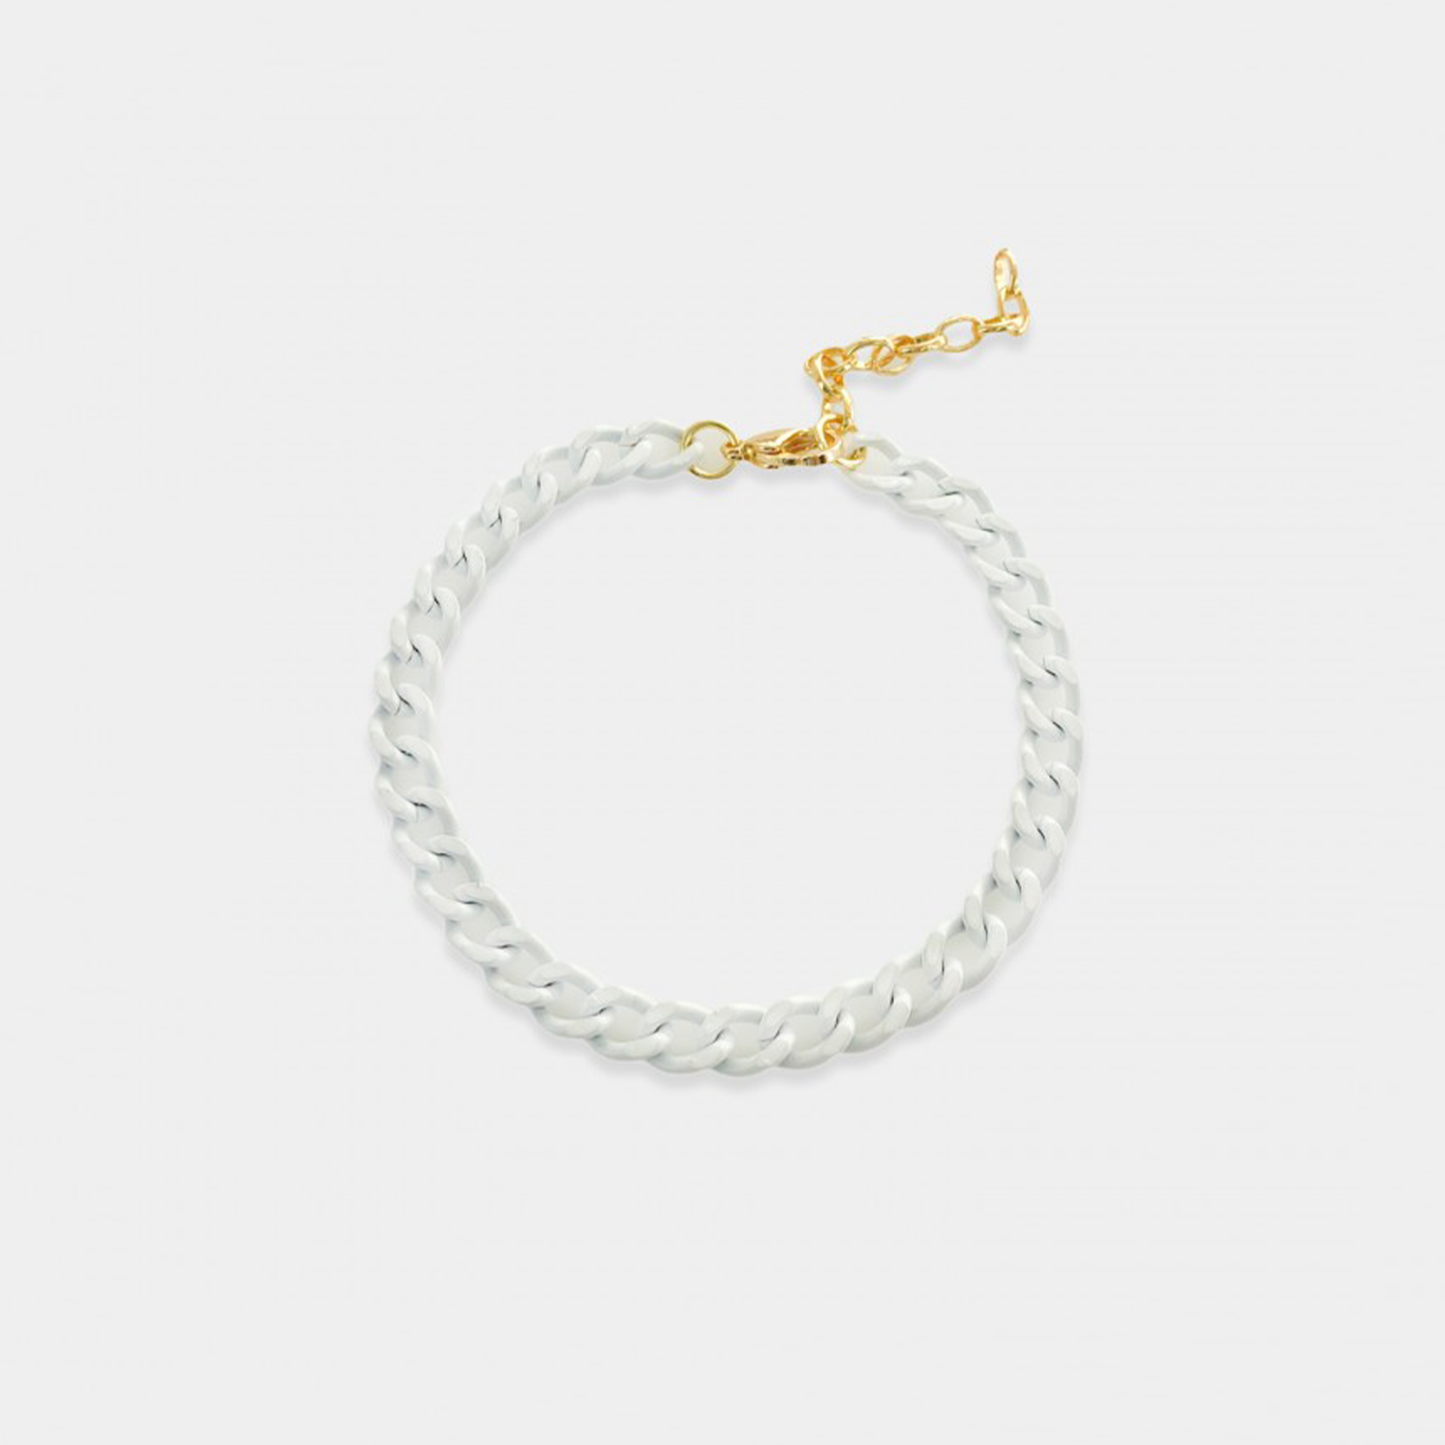 Enamel Curb Bracelet. 7" enamel curb chain bracelet with lobster clasp